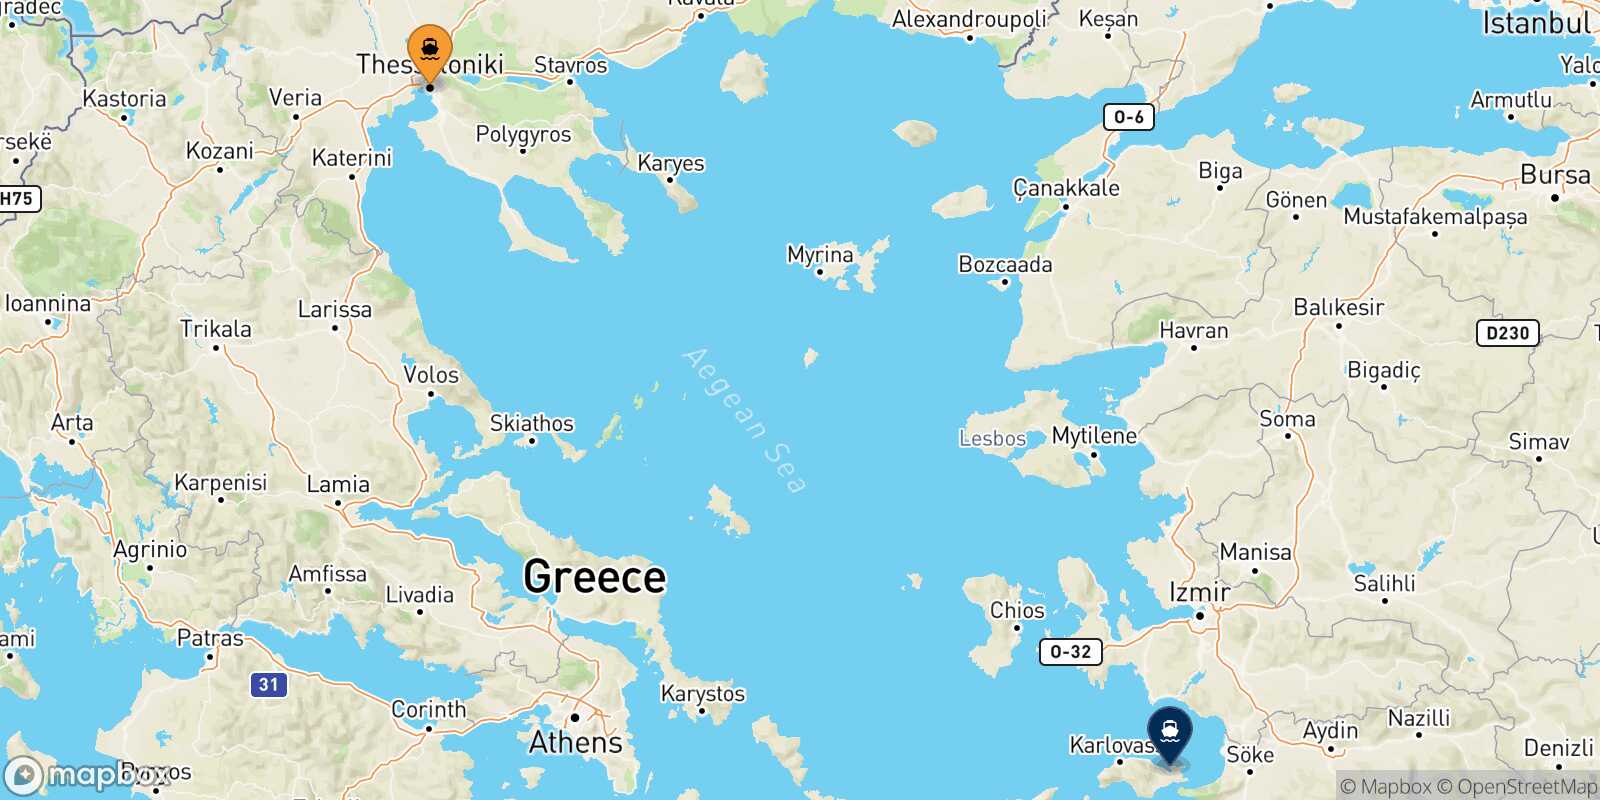 Thessaloniki Vathi (Samos) route map